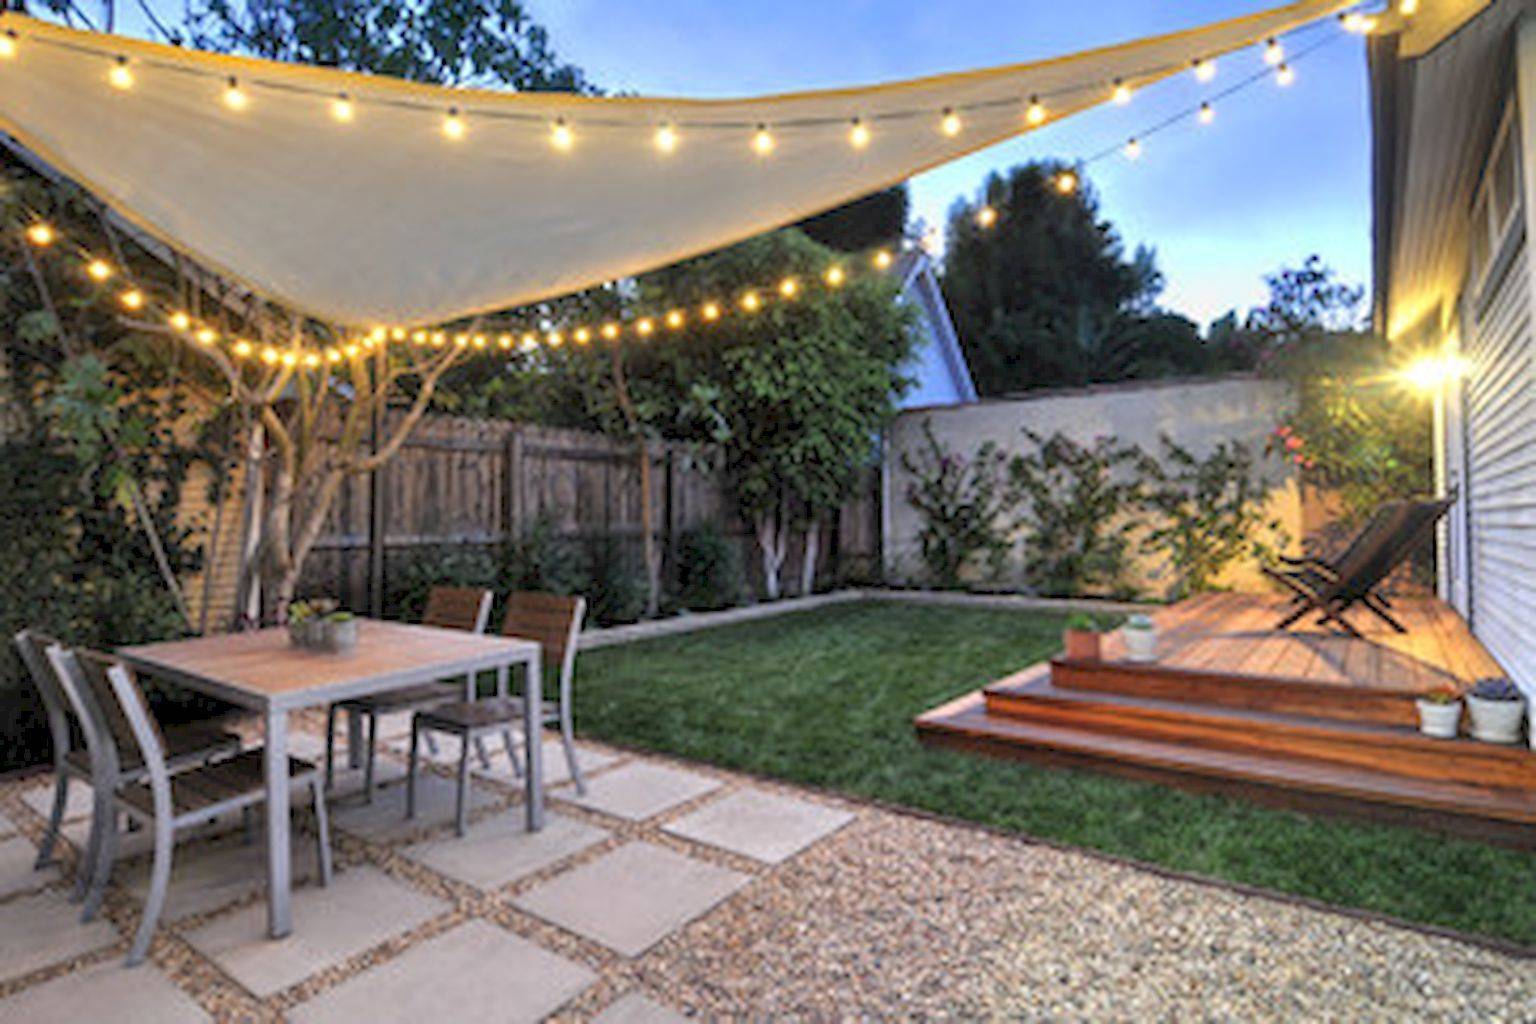 Patio Ideas Small Yard Cozy Backyard Seating Area Back Garden